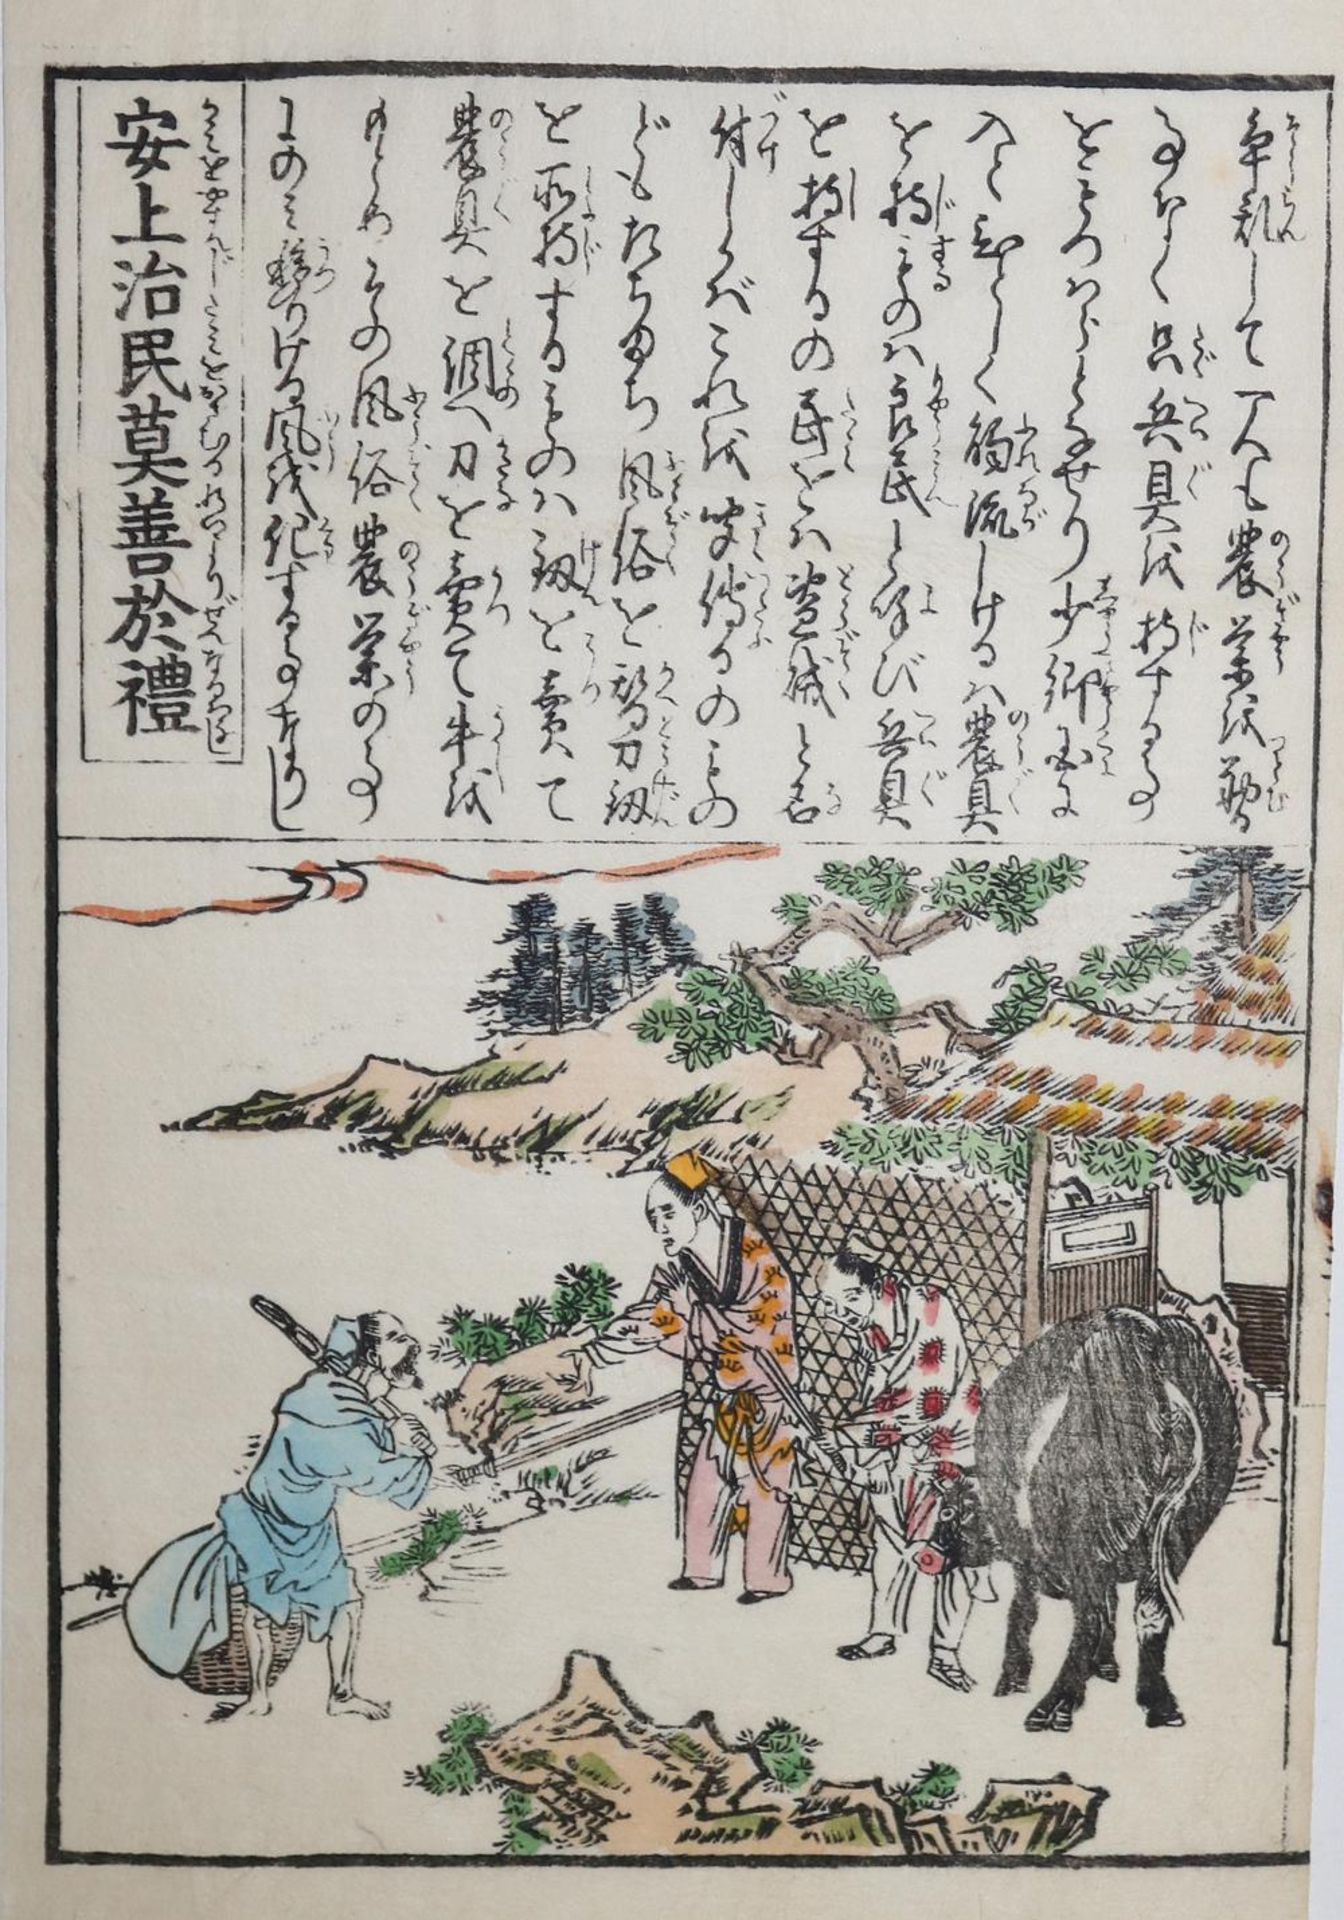 Kitao Masayoshi (auch Kuwagata, Keisai, 1764-1824).5 handkol. Buch-Holzschnitte. (Bunka 1814).